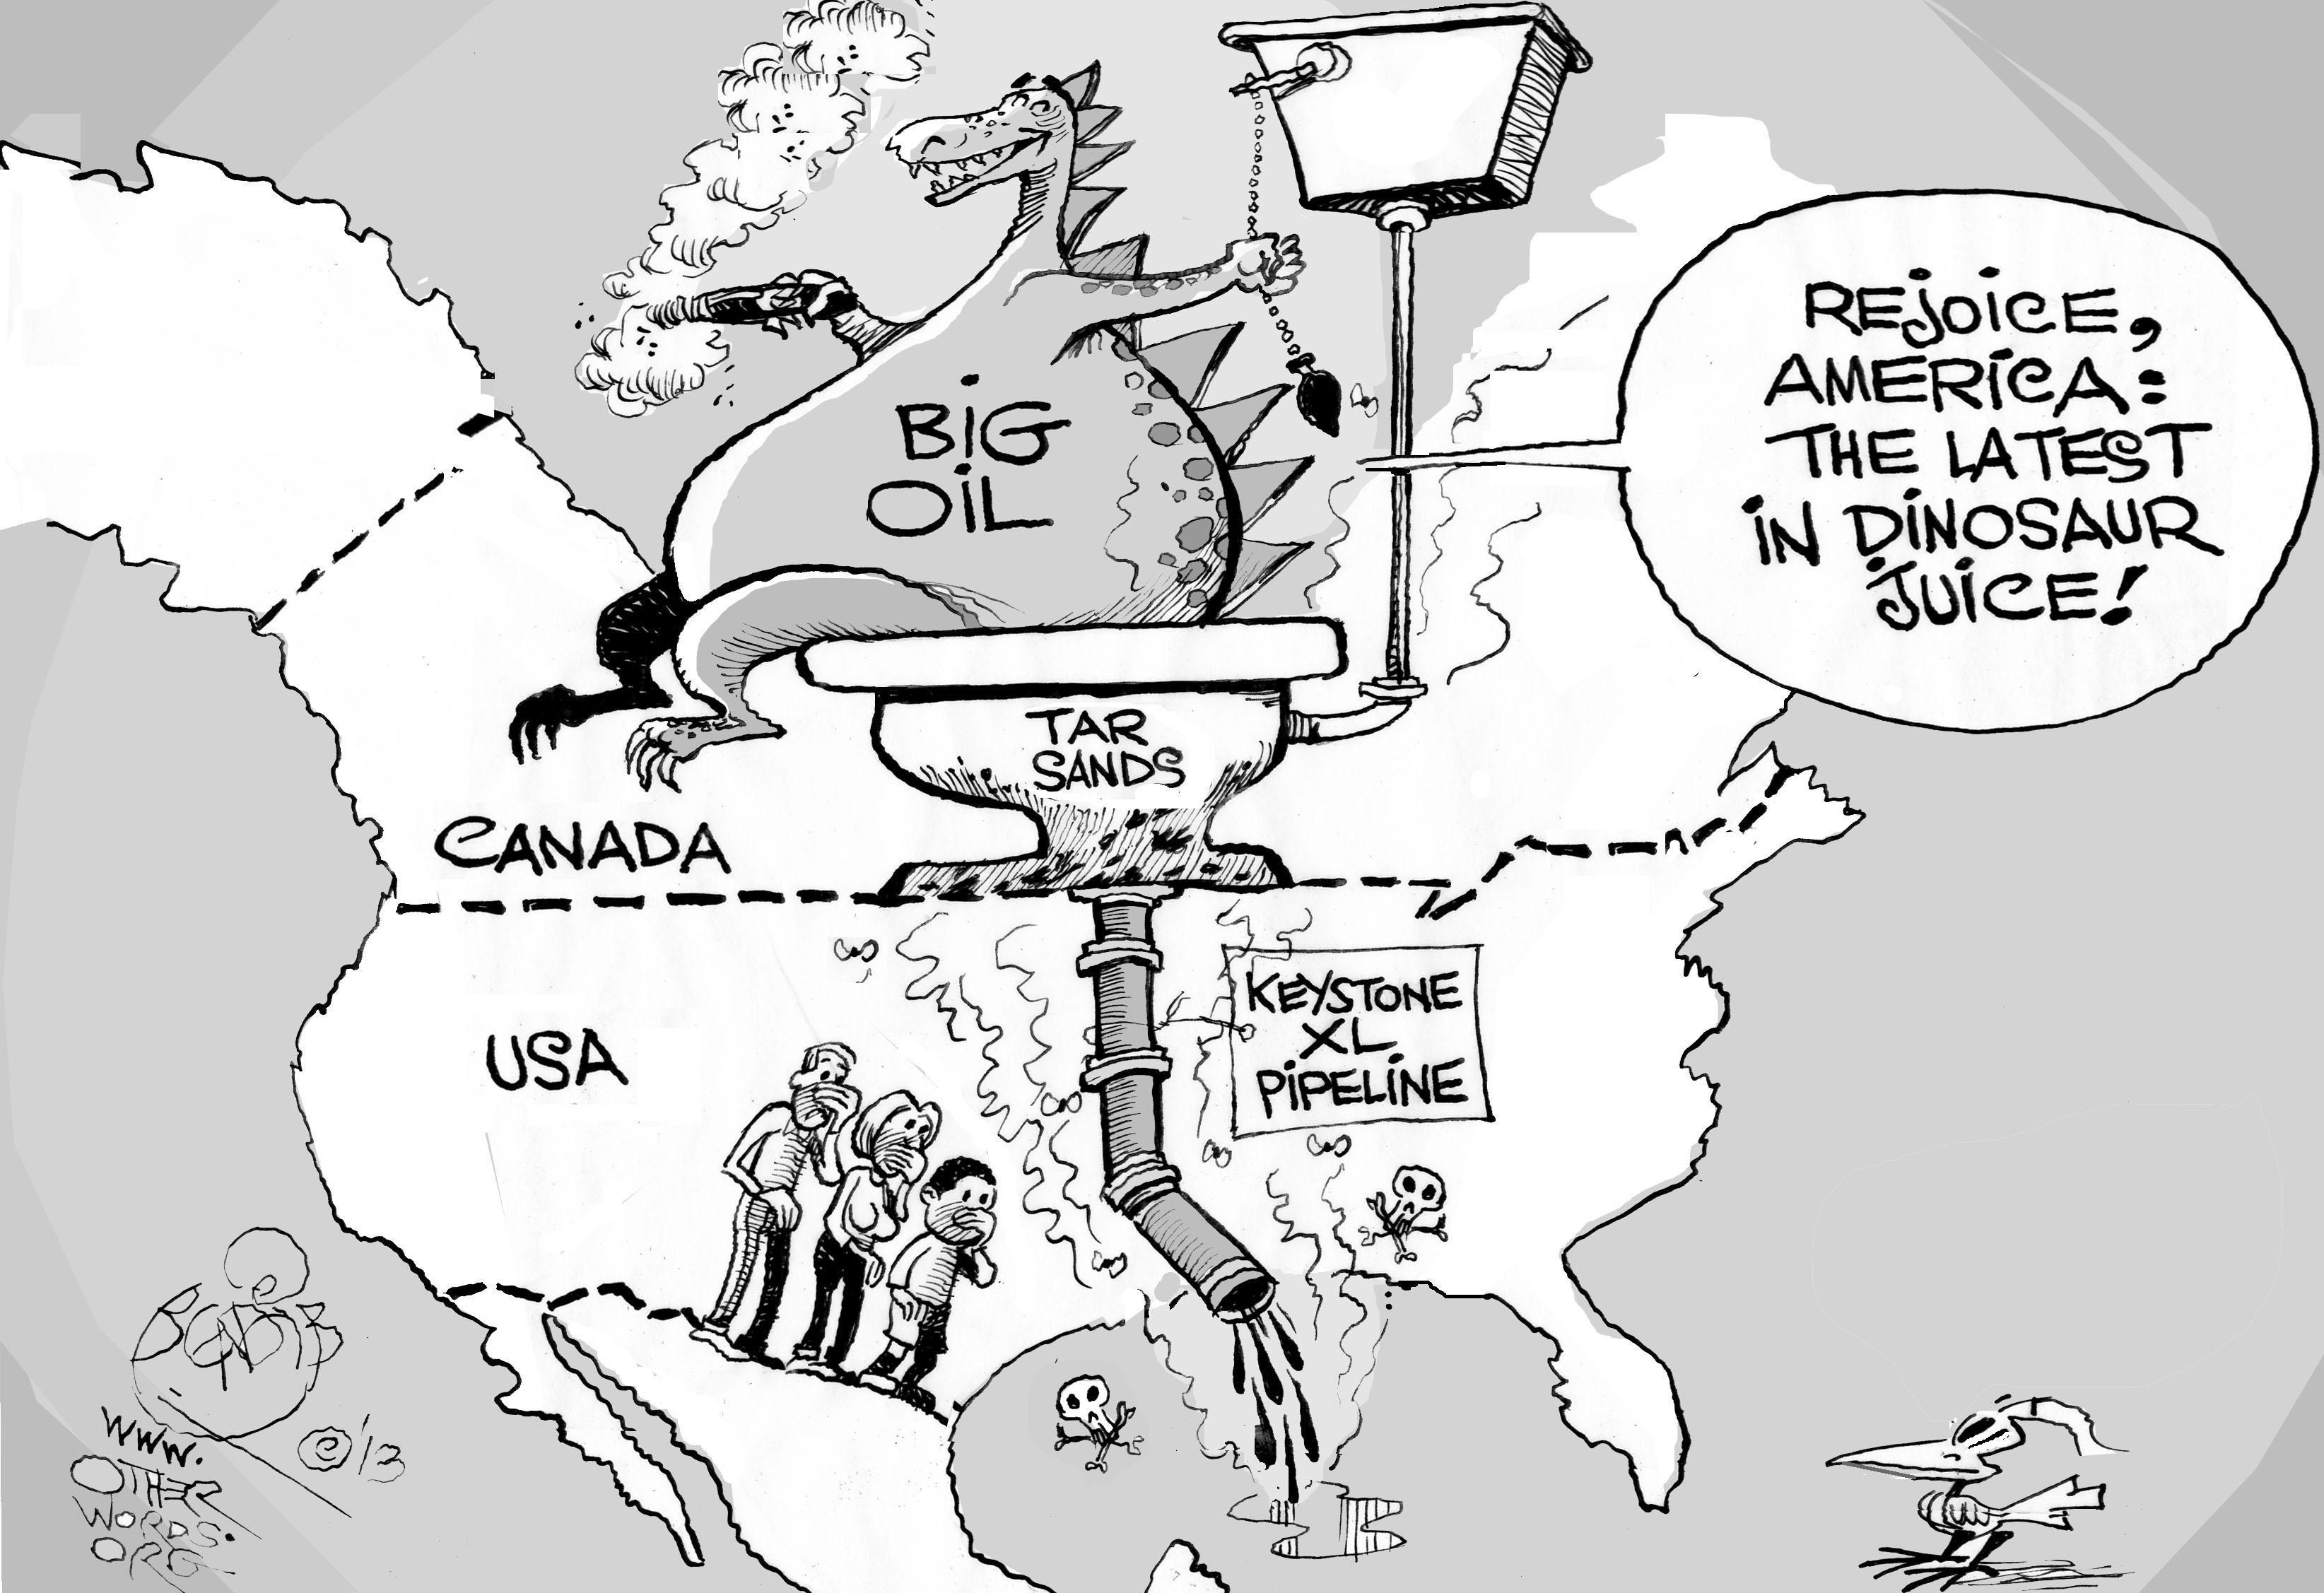 keystone-xl-pipeline-tar-sands-cartoon.jpg